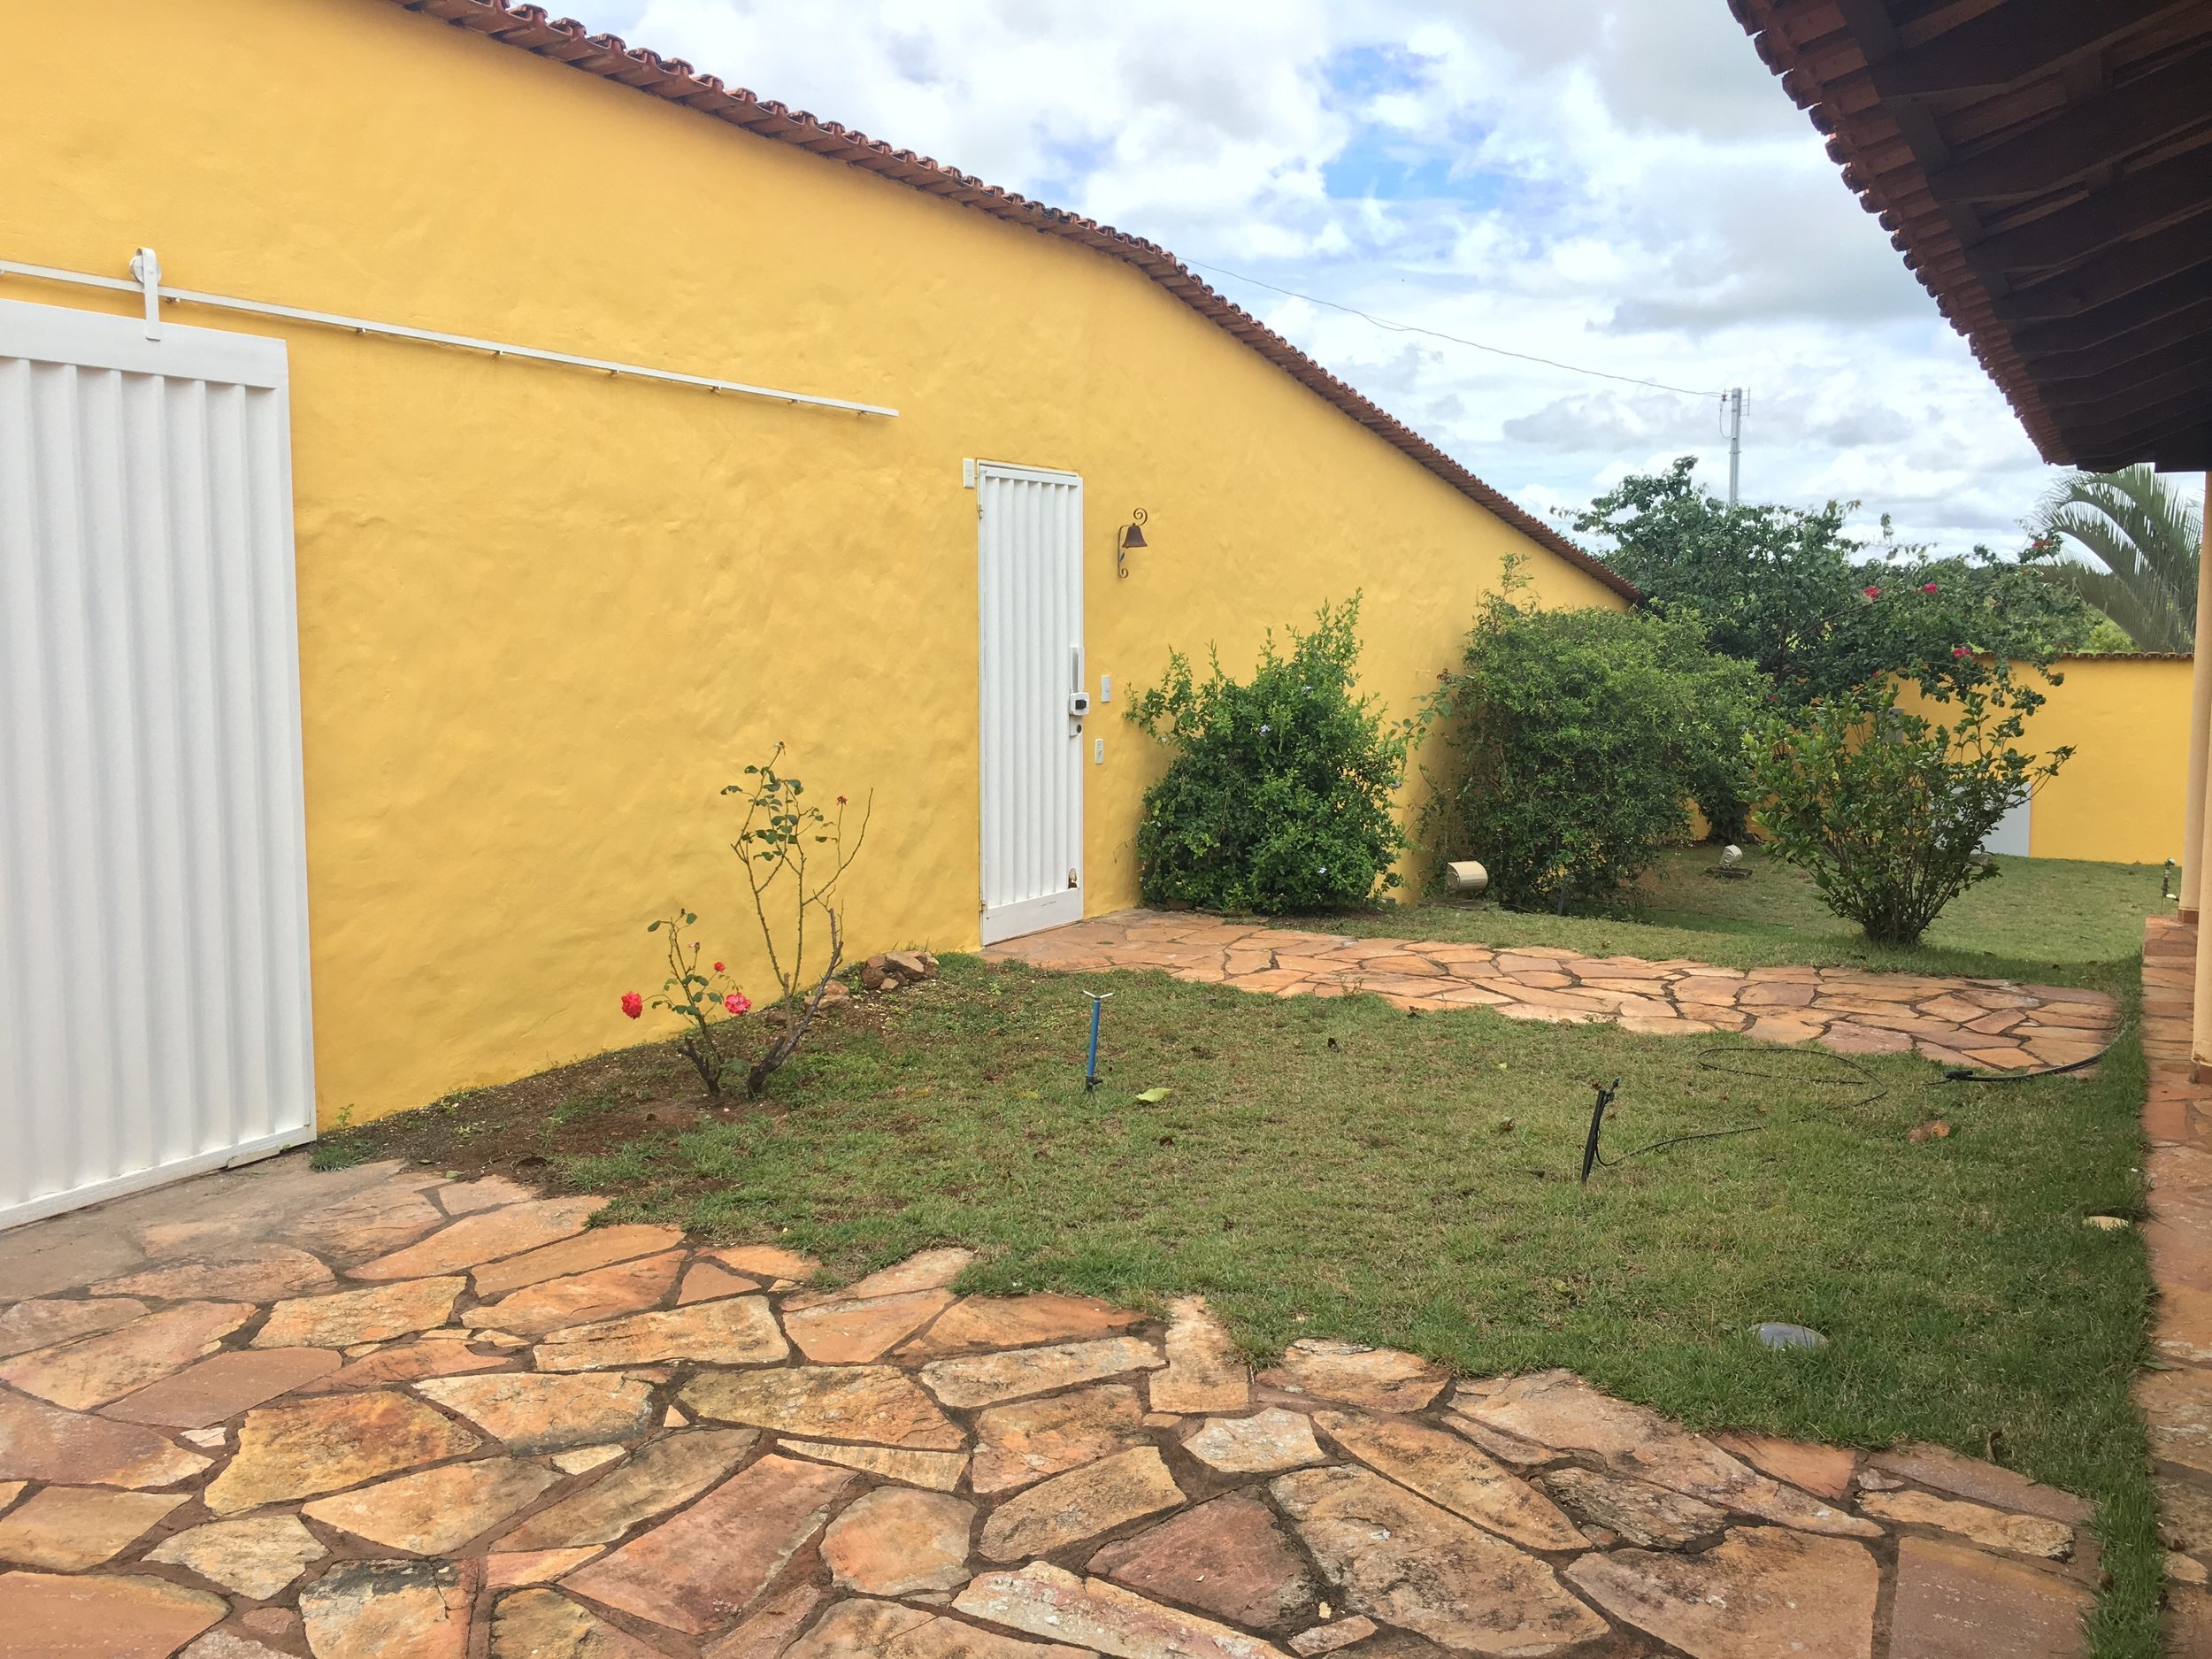 Casa de Luz - pedestrian entry (right) and garage door entry into walled property